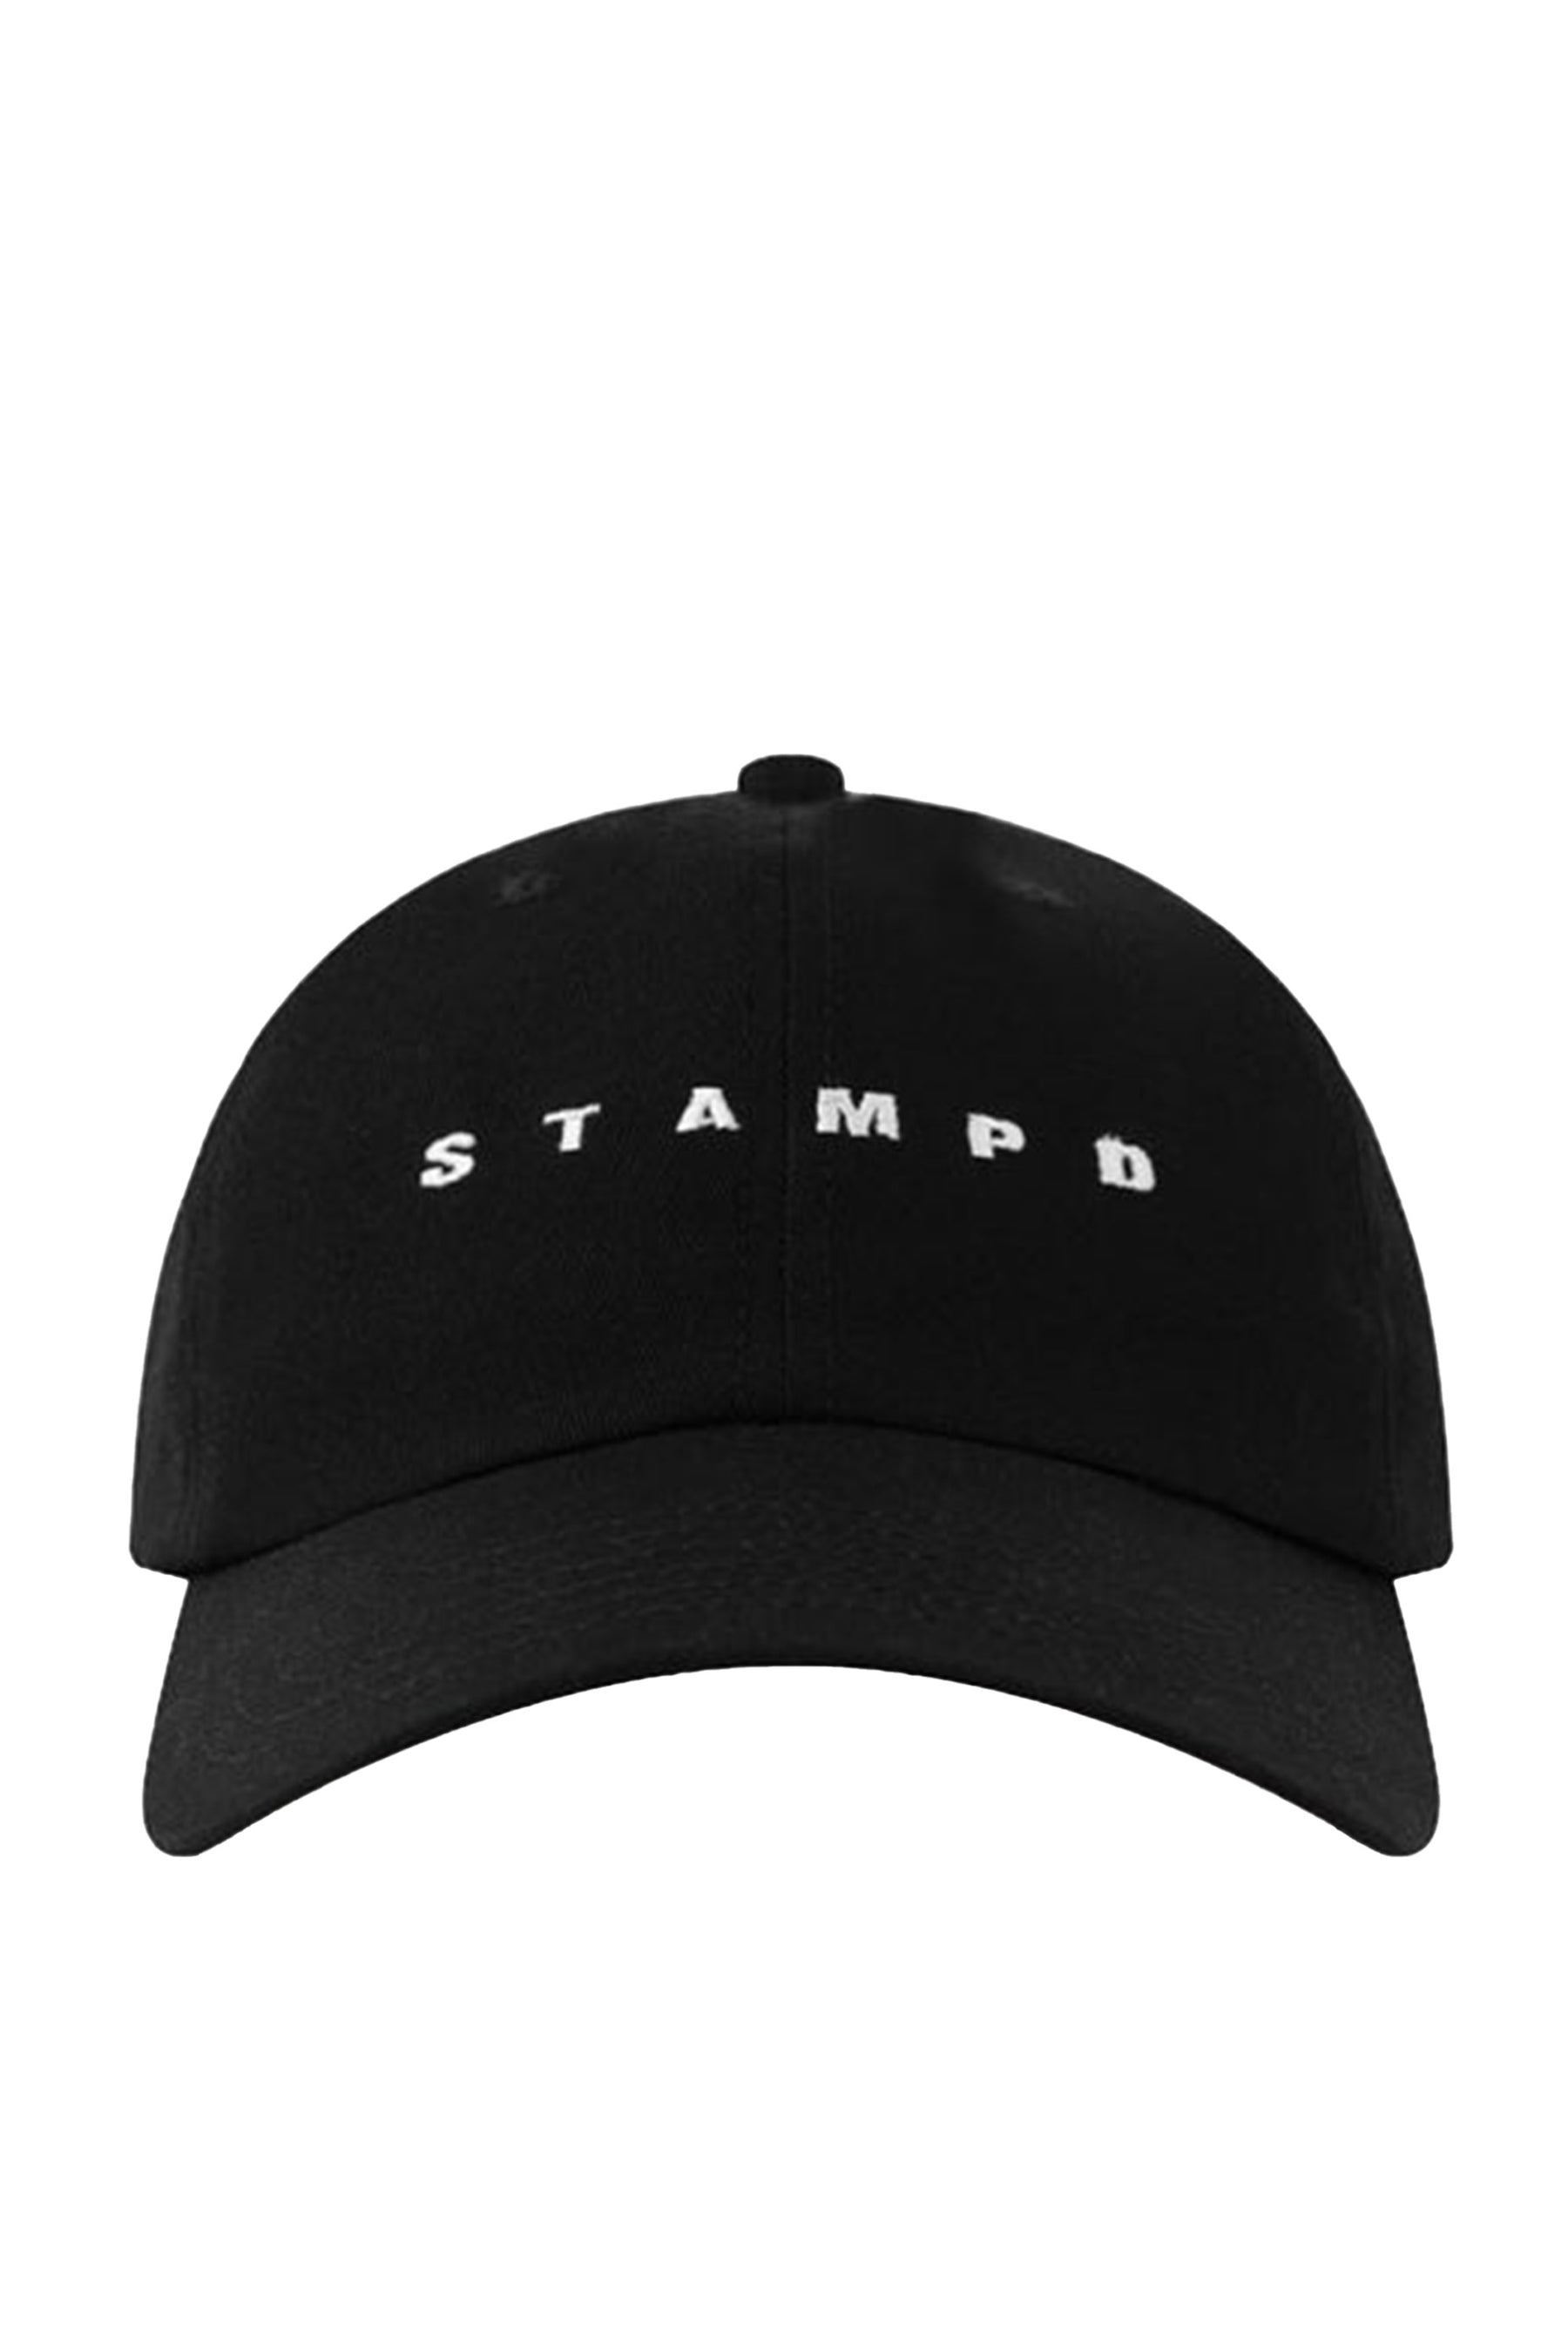 Stampd新品☆STAMPD スタンプド キャップ - キャップ